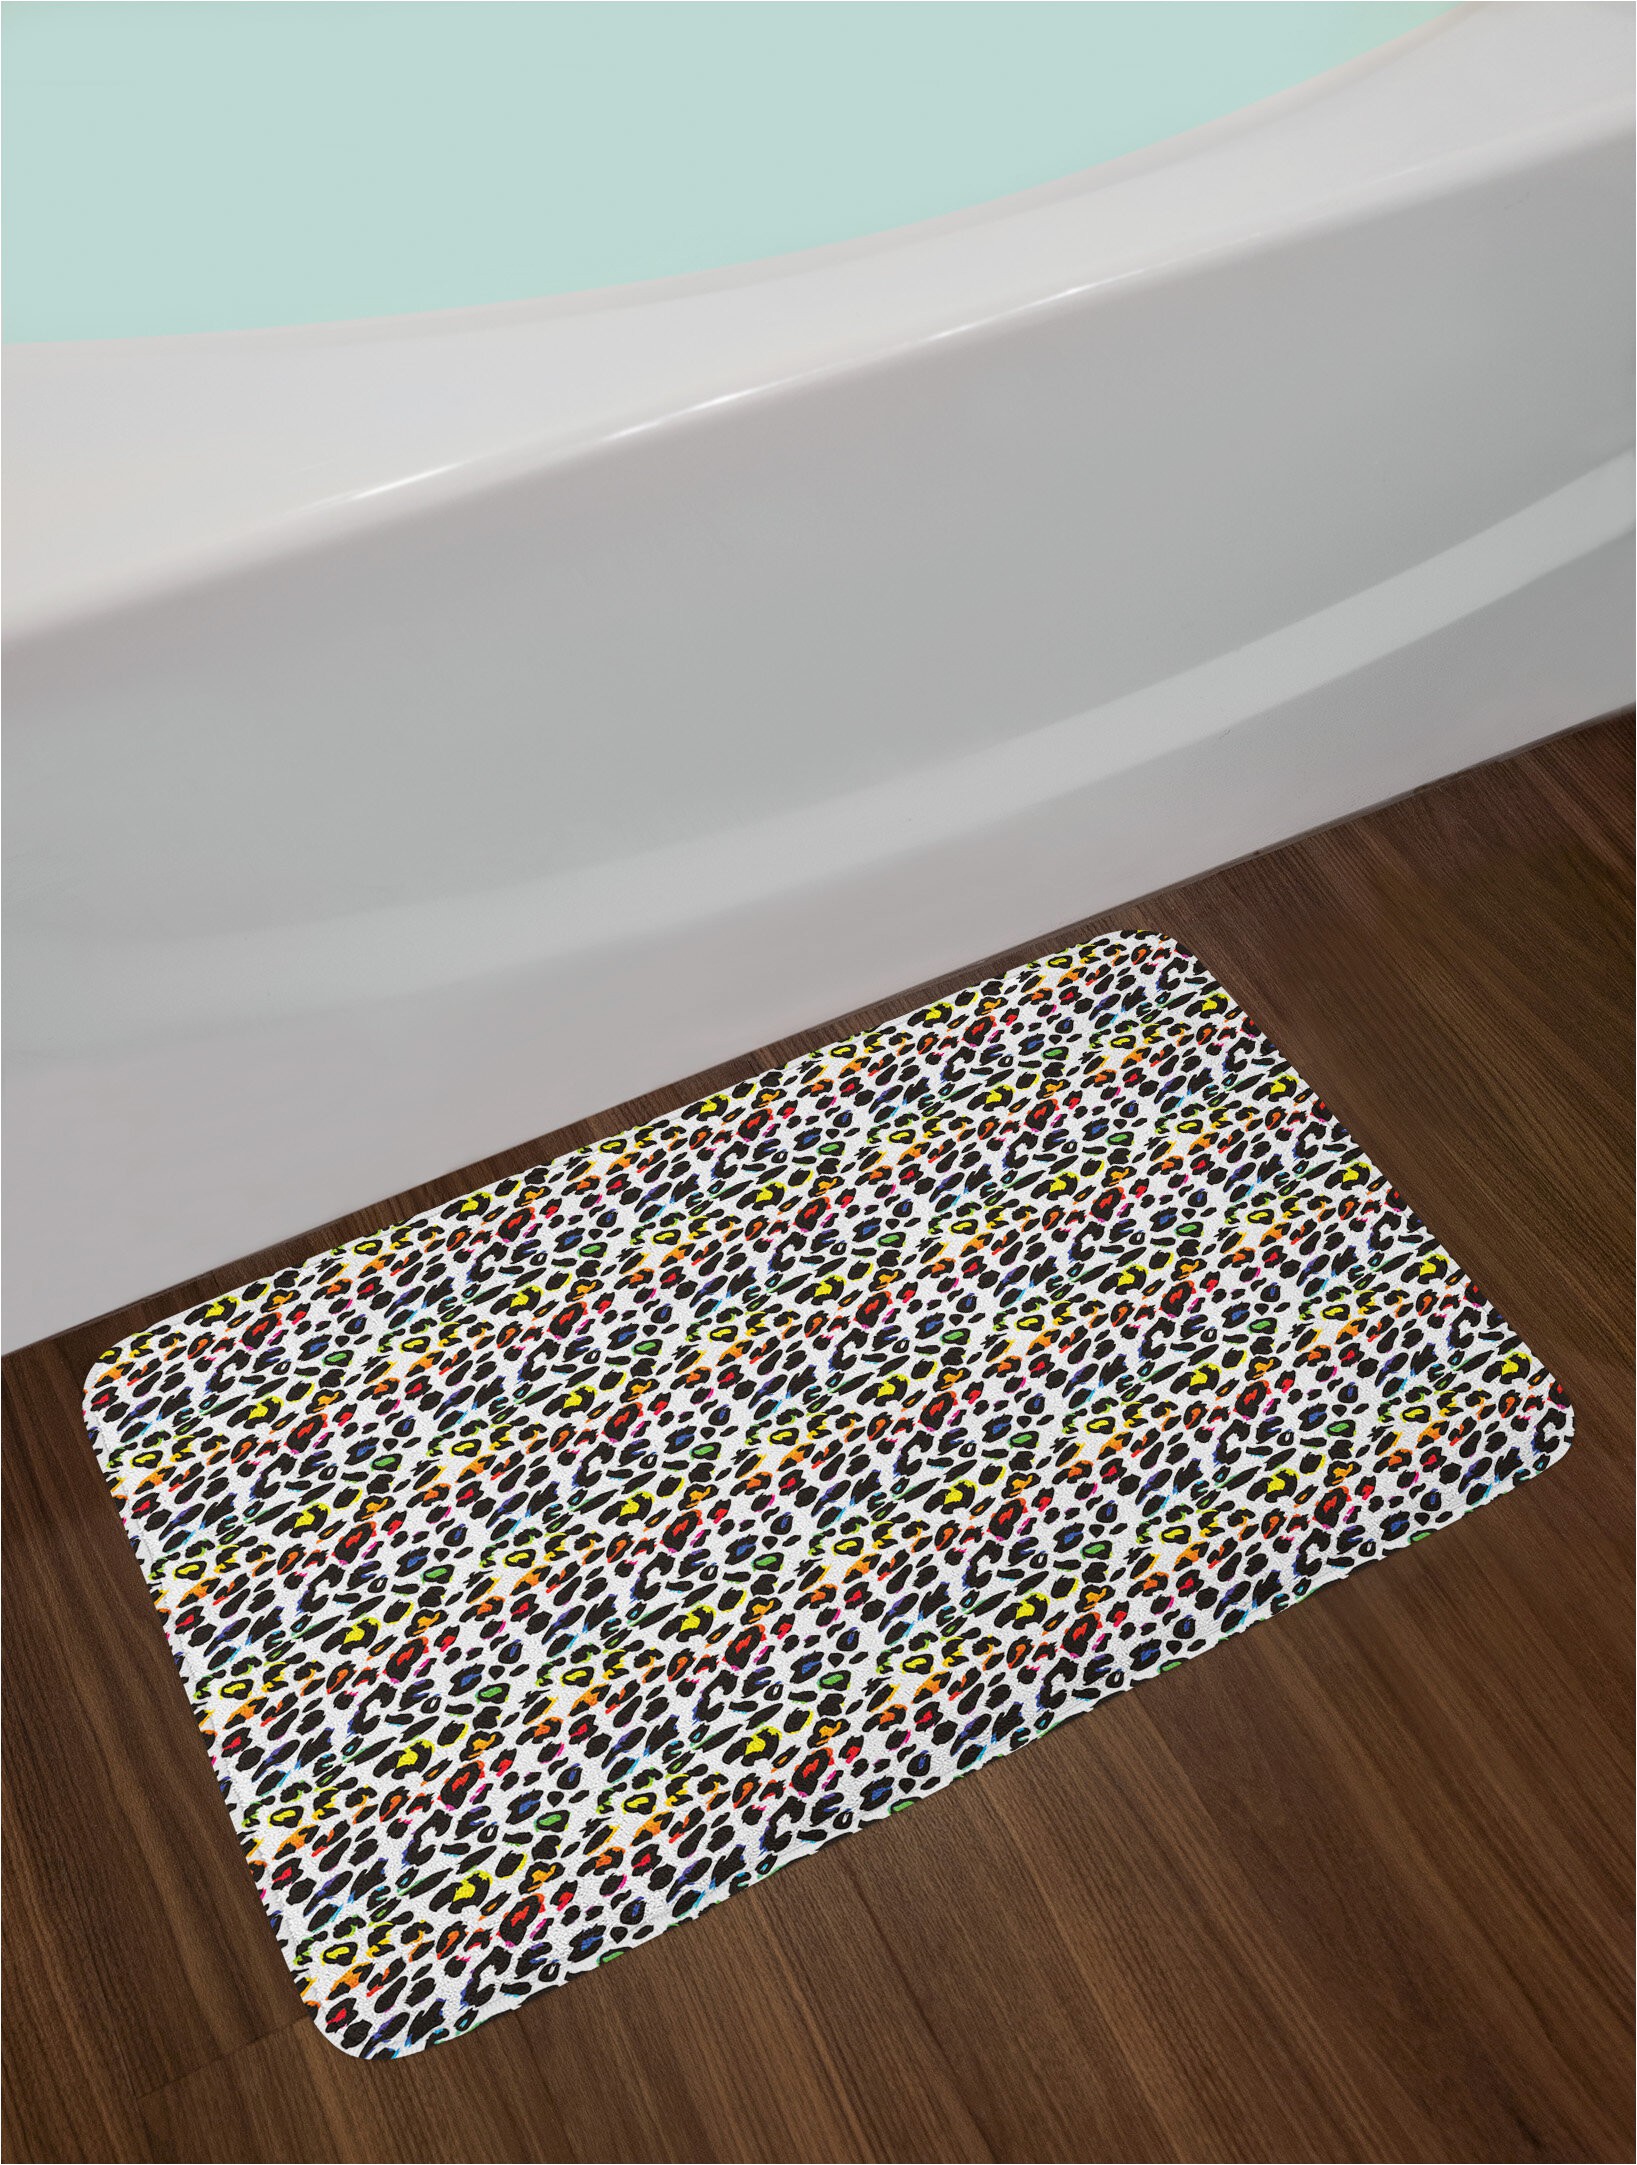 Rugs & Toilet Covers Home & Garden Roaring Leopard Bathroom NonSlip